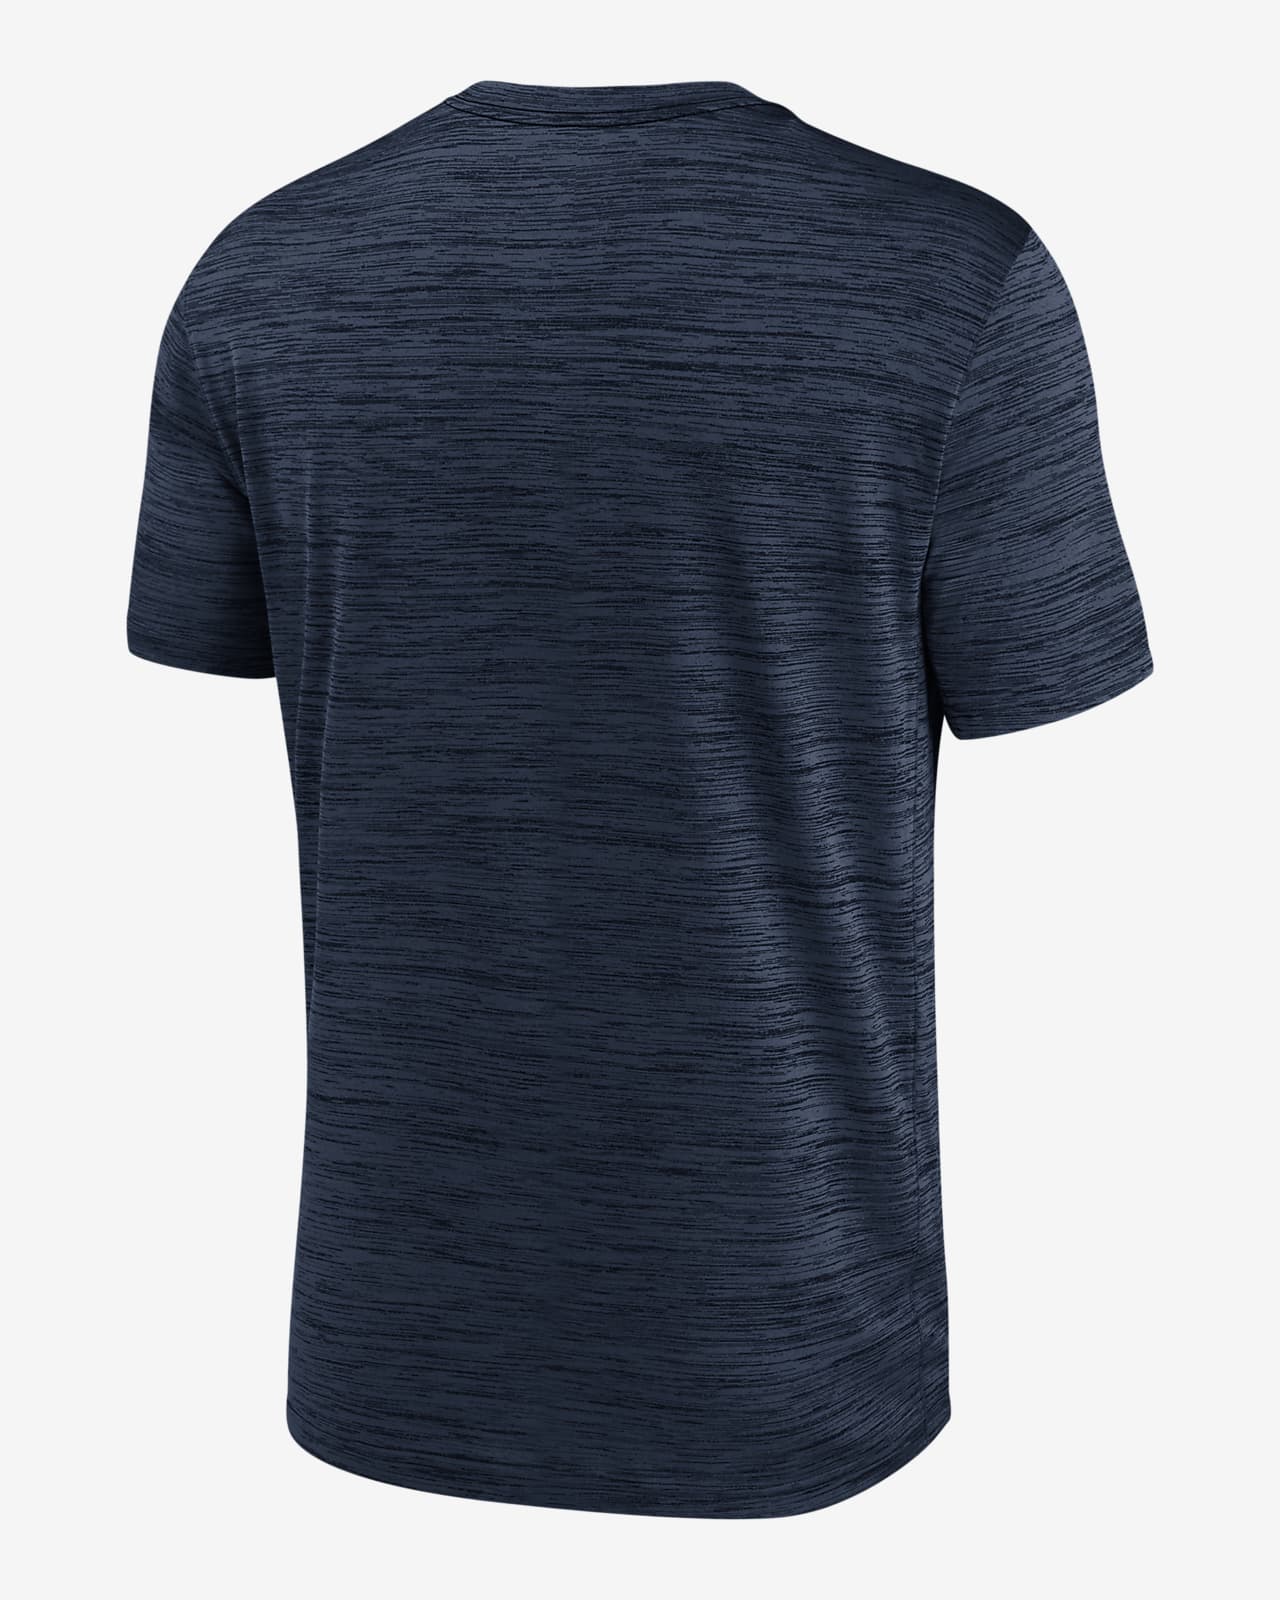 Nike Dri-FIT Velocity Practice (MLB Washington Nationals) Men's T-Shirt